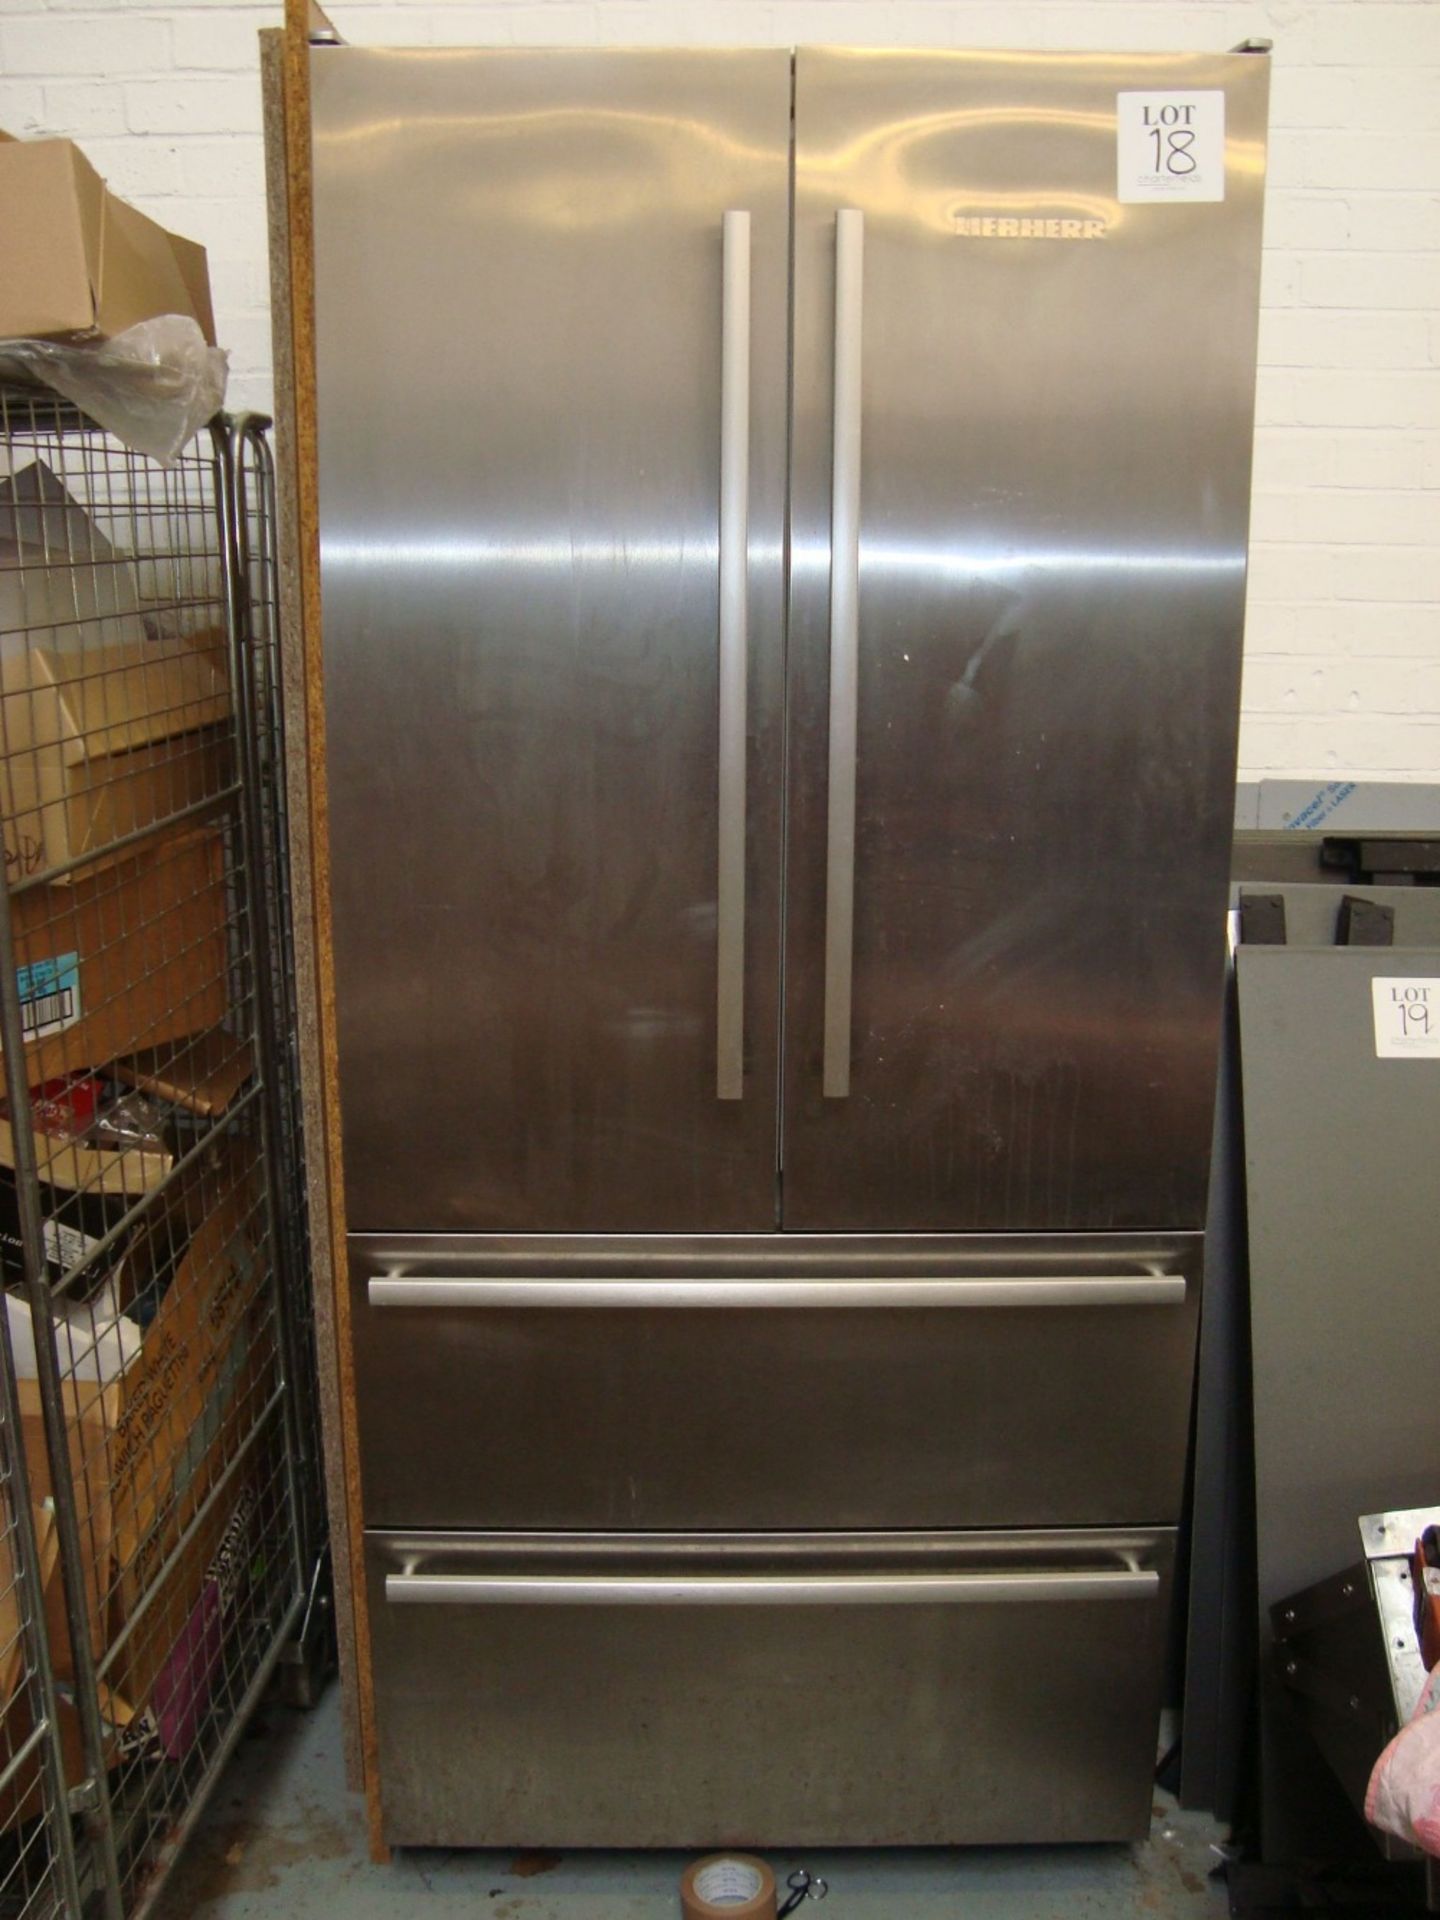 A Liebherr full height double door double drawer stainless steel fridge